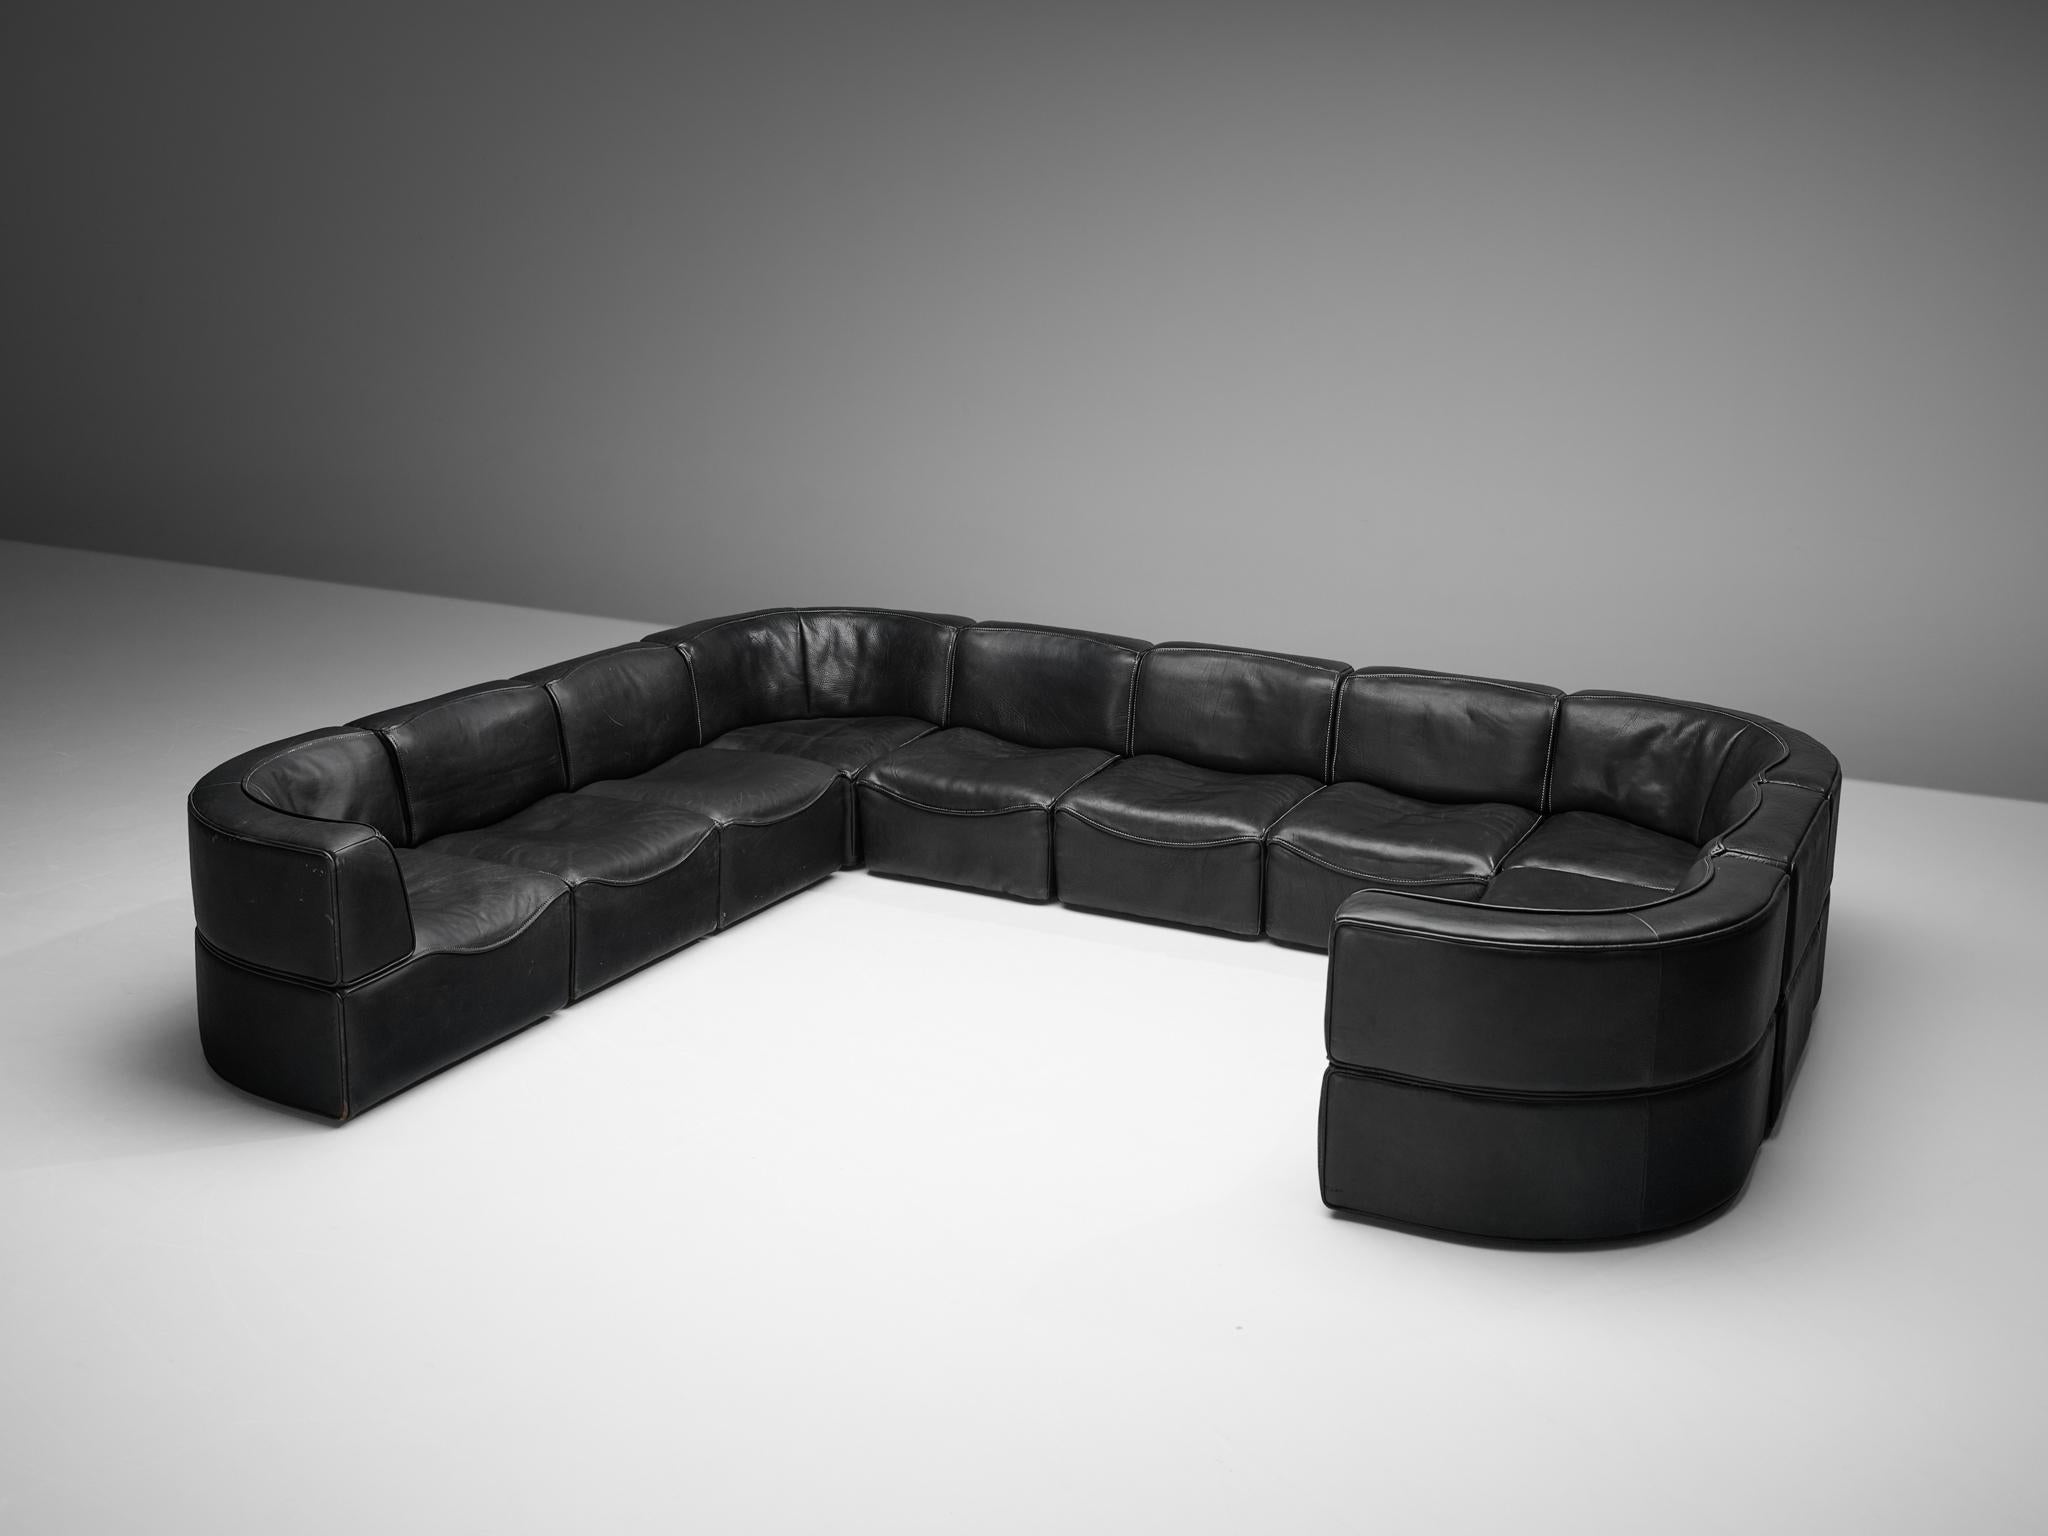 Swiss De Sede 'DS-15' Modular Sofa in Black Leather